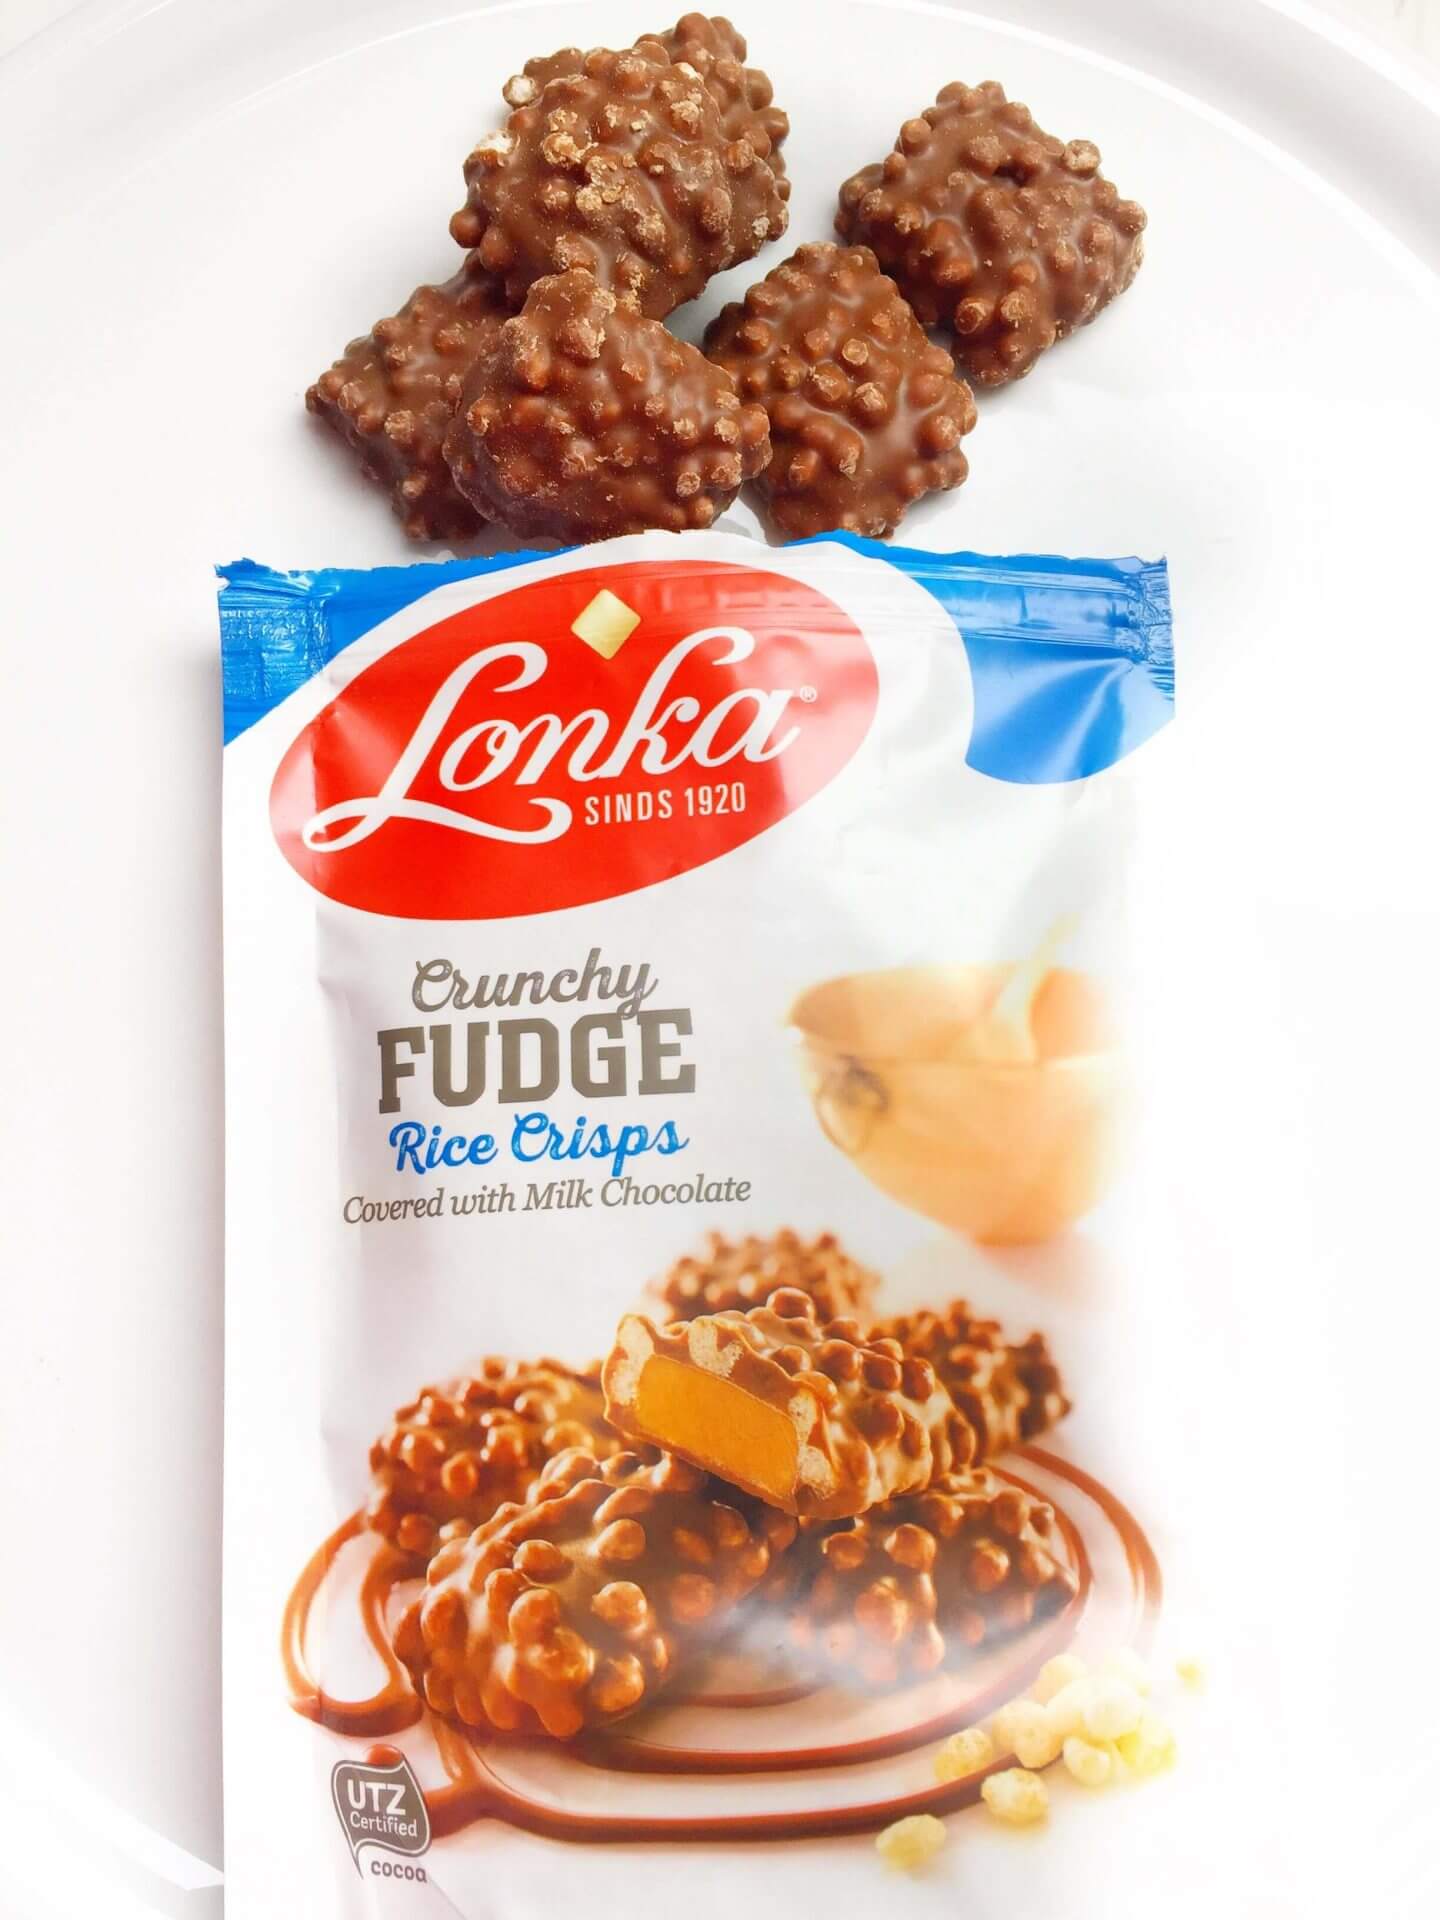 Lonka Crunchy Fudge Rice Crisps